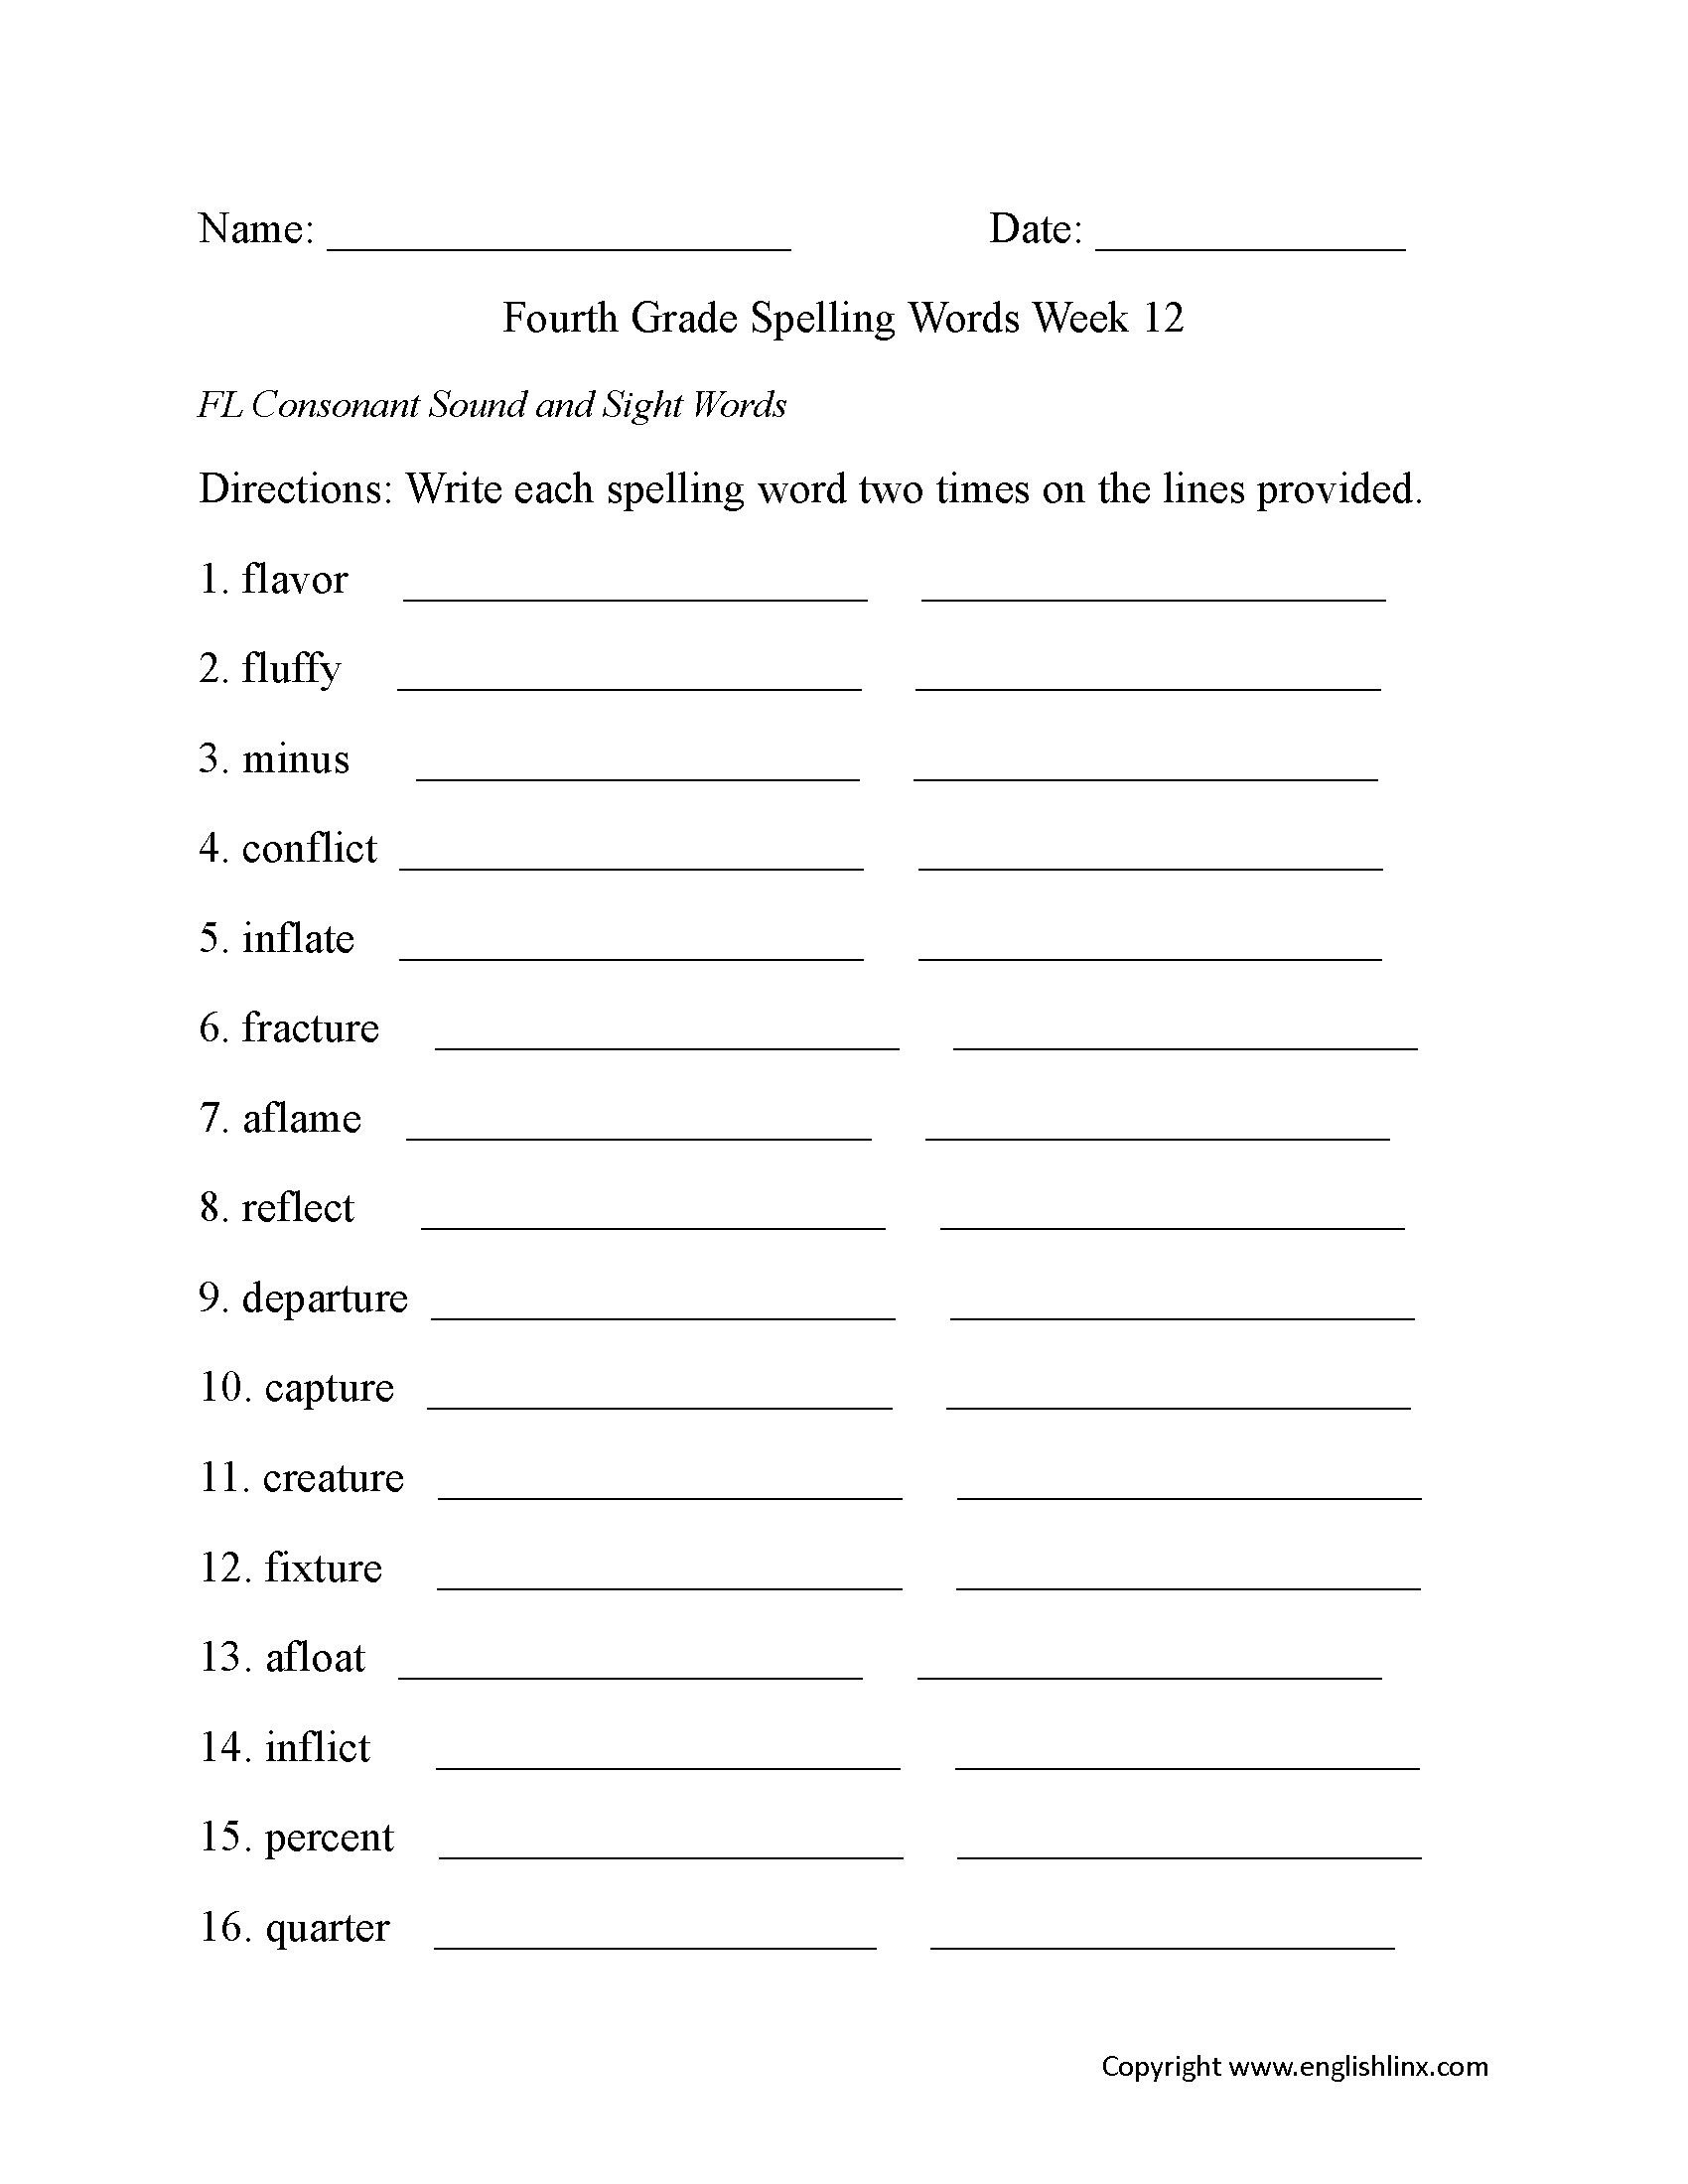 Week 12 FL Consonant Fourth Grade Spelling Worksheets